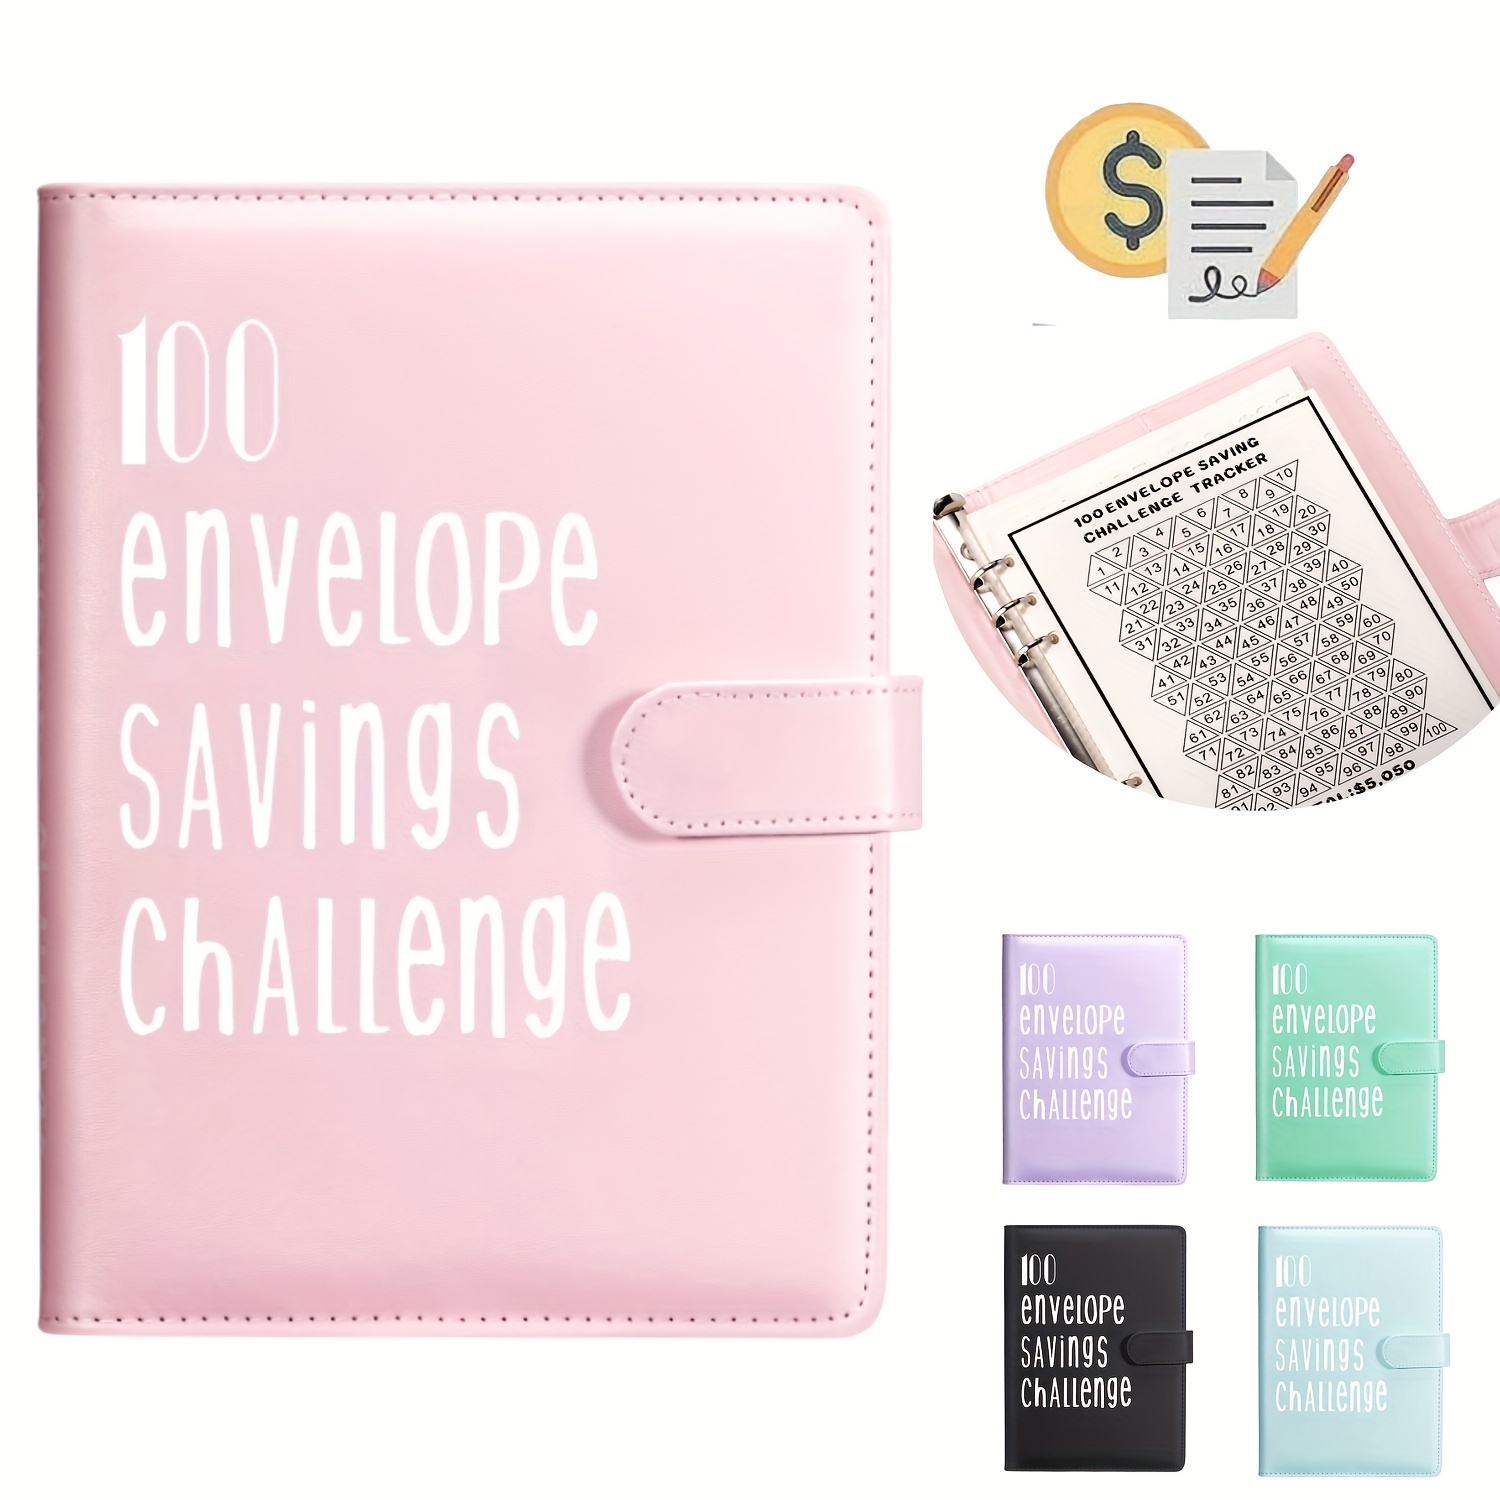 Carpeta de desafío de 100 ahorros, carpeta de desafíos de sobre, libro de  desafíos de ahorro con sobres, desafío de ahorro de sobres, mini carpeta de